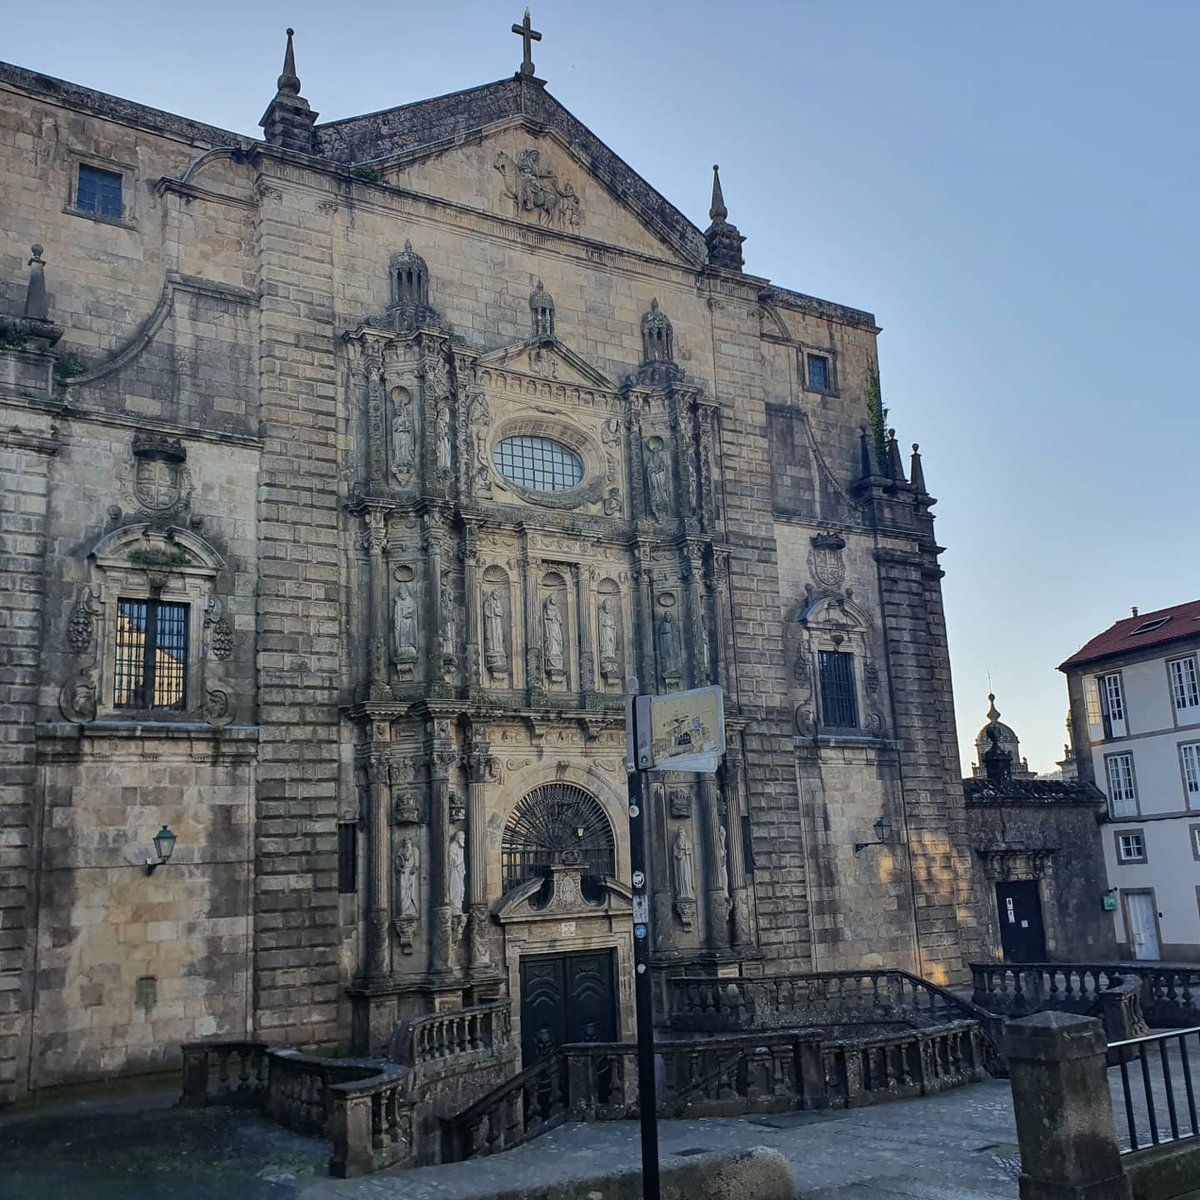 Some fresh air of my home city Santiago de Compostela needed after so much science from @escardio #ESCCongress #digitaldisconnect #diastole